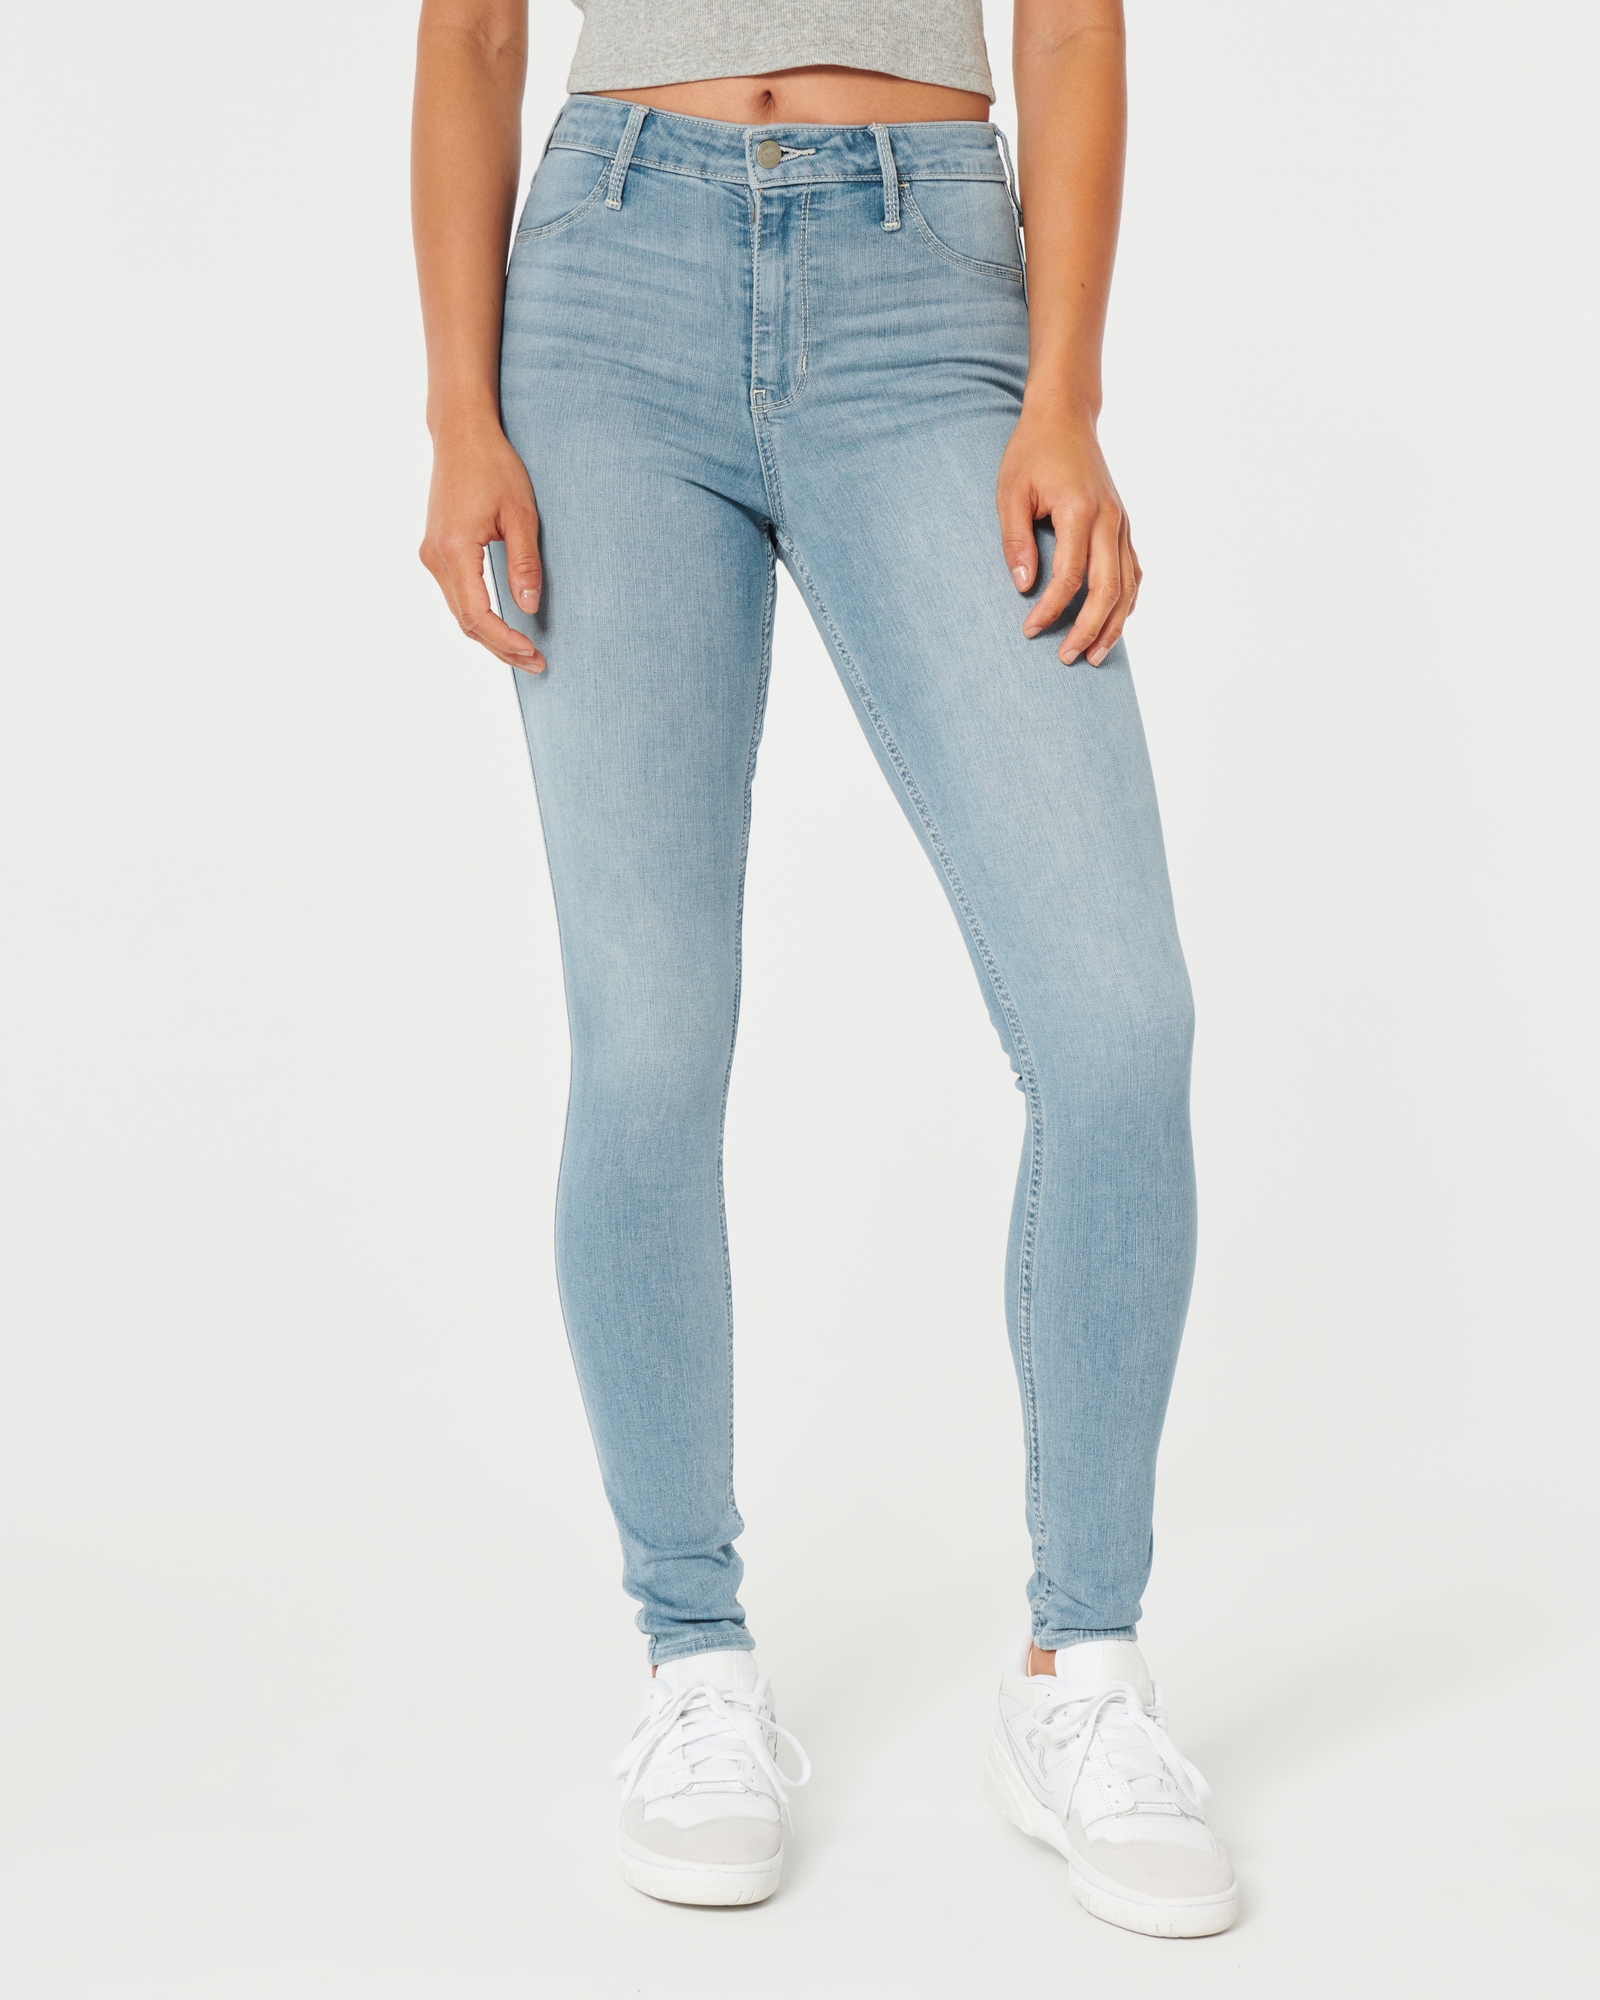 Hollister jeans size 3R high rise jean leggings advanced stretch.